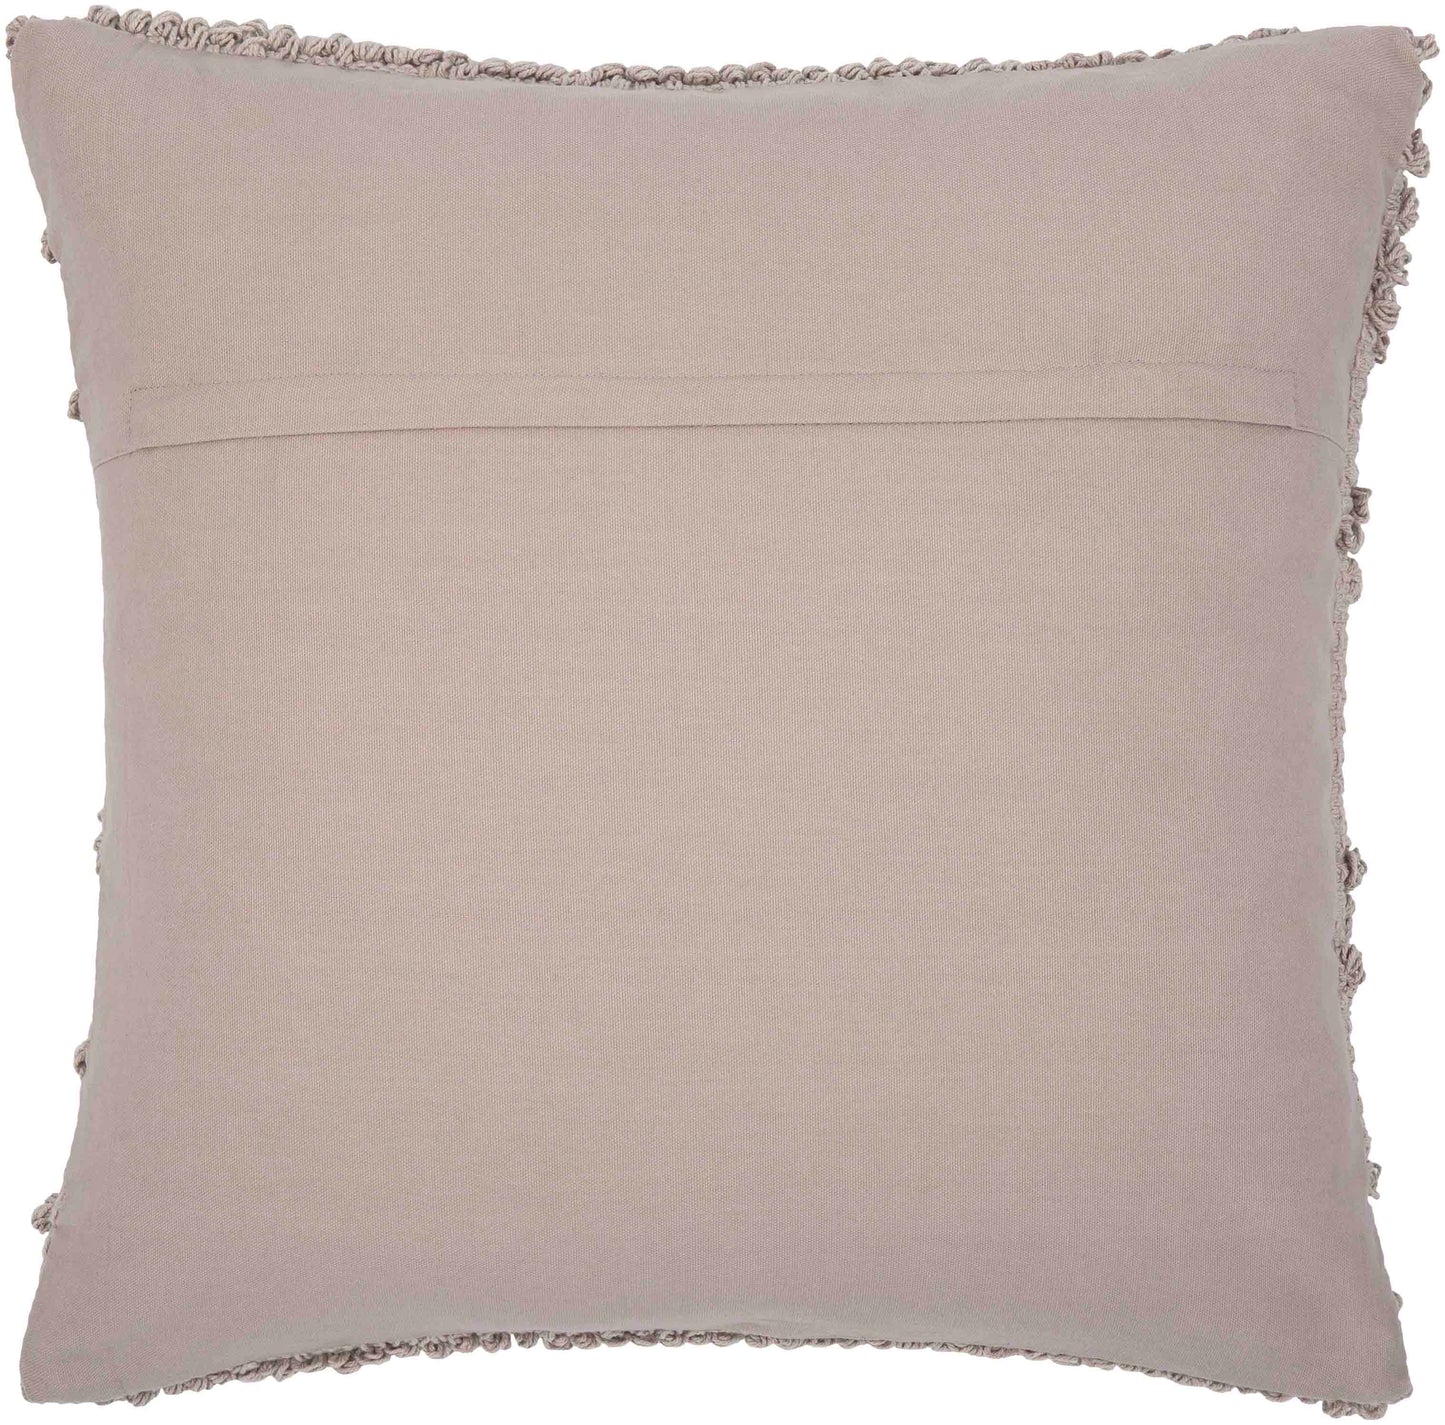 Mijnden Light Gray Pillow Cover